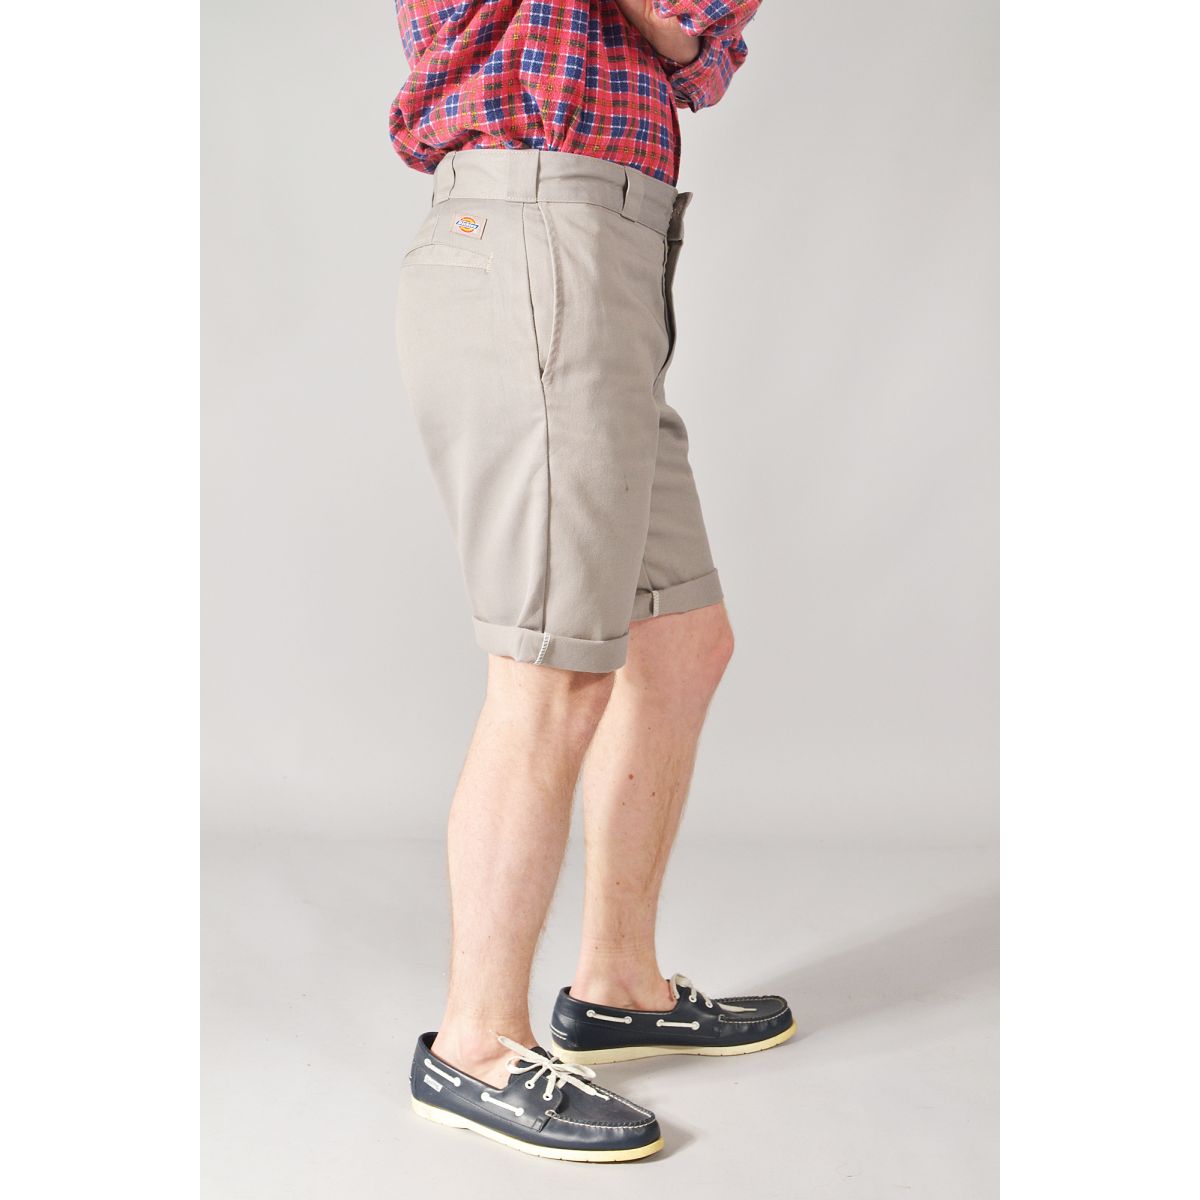 Vintage Dickies Cut-Off Trouser Shorts 28,29,30,31,32,33,34,36,38,,40